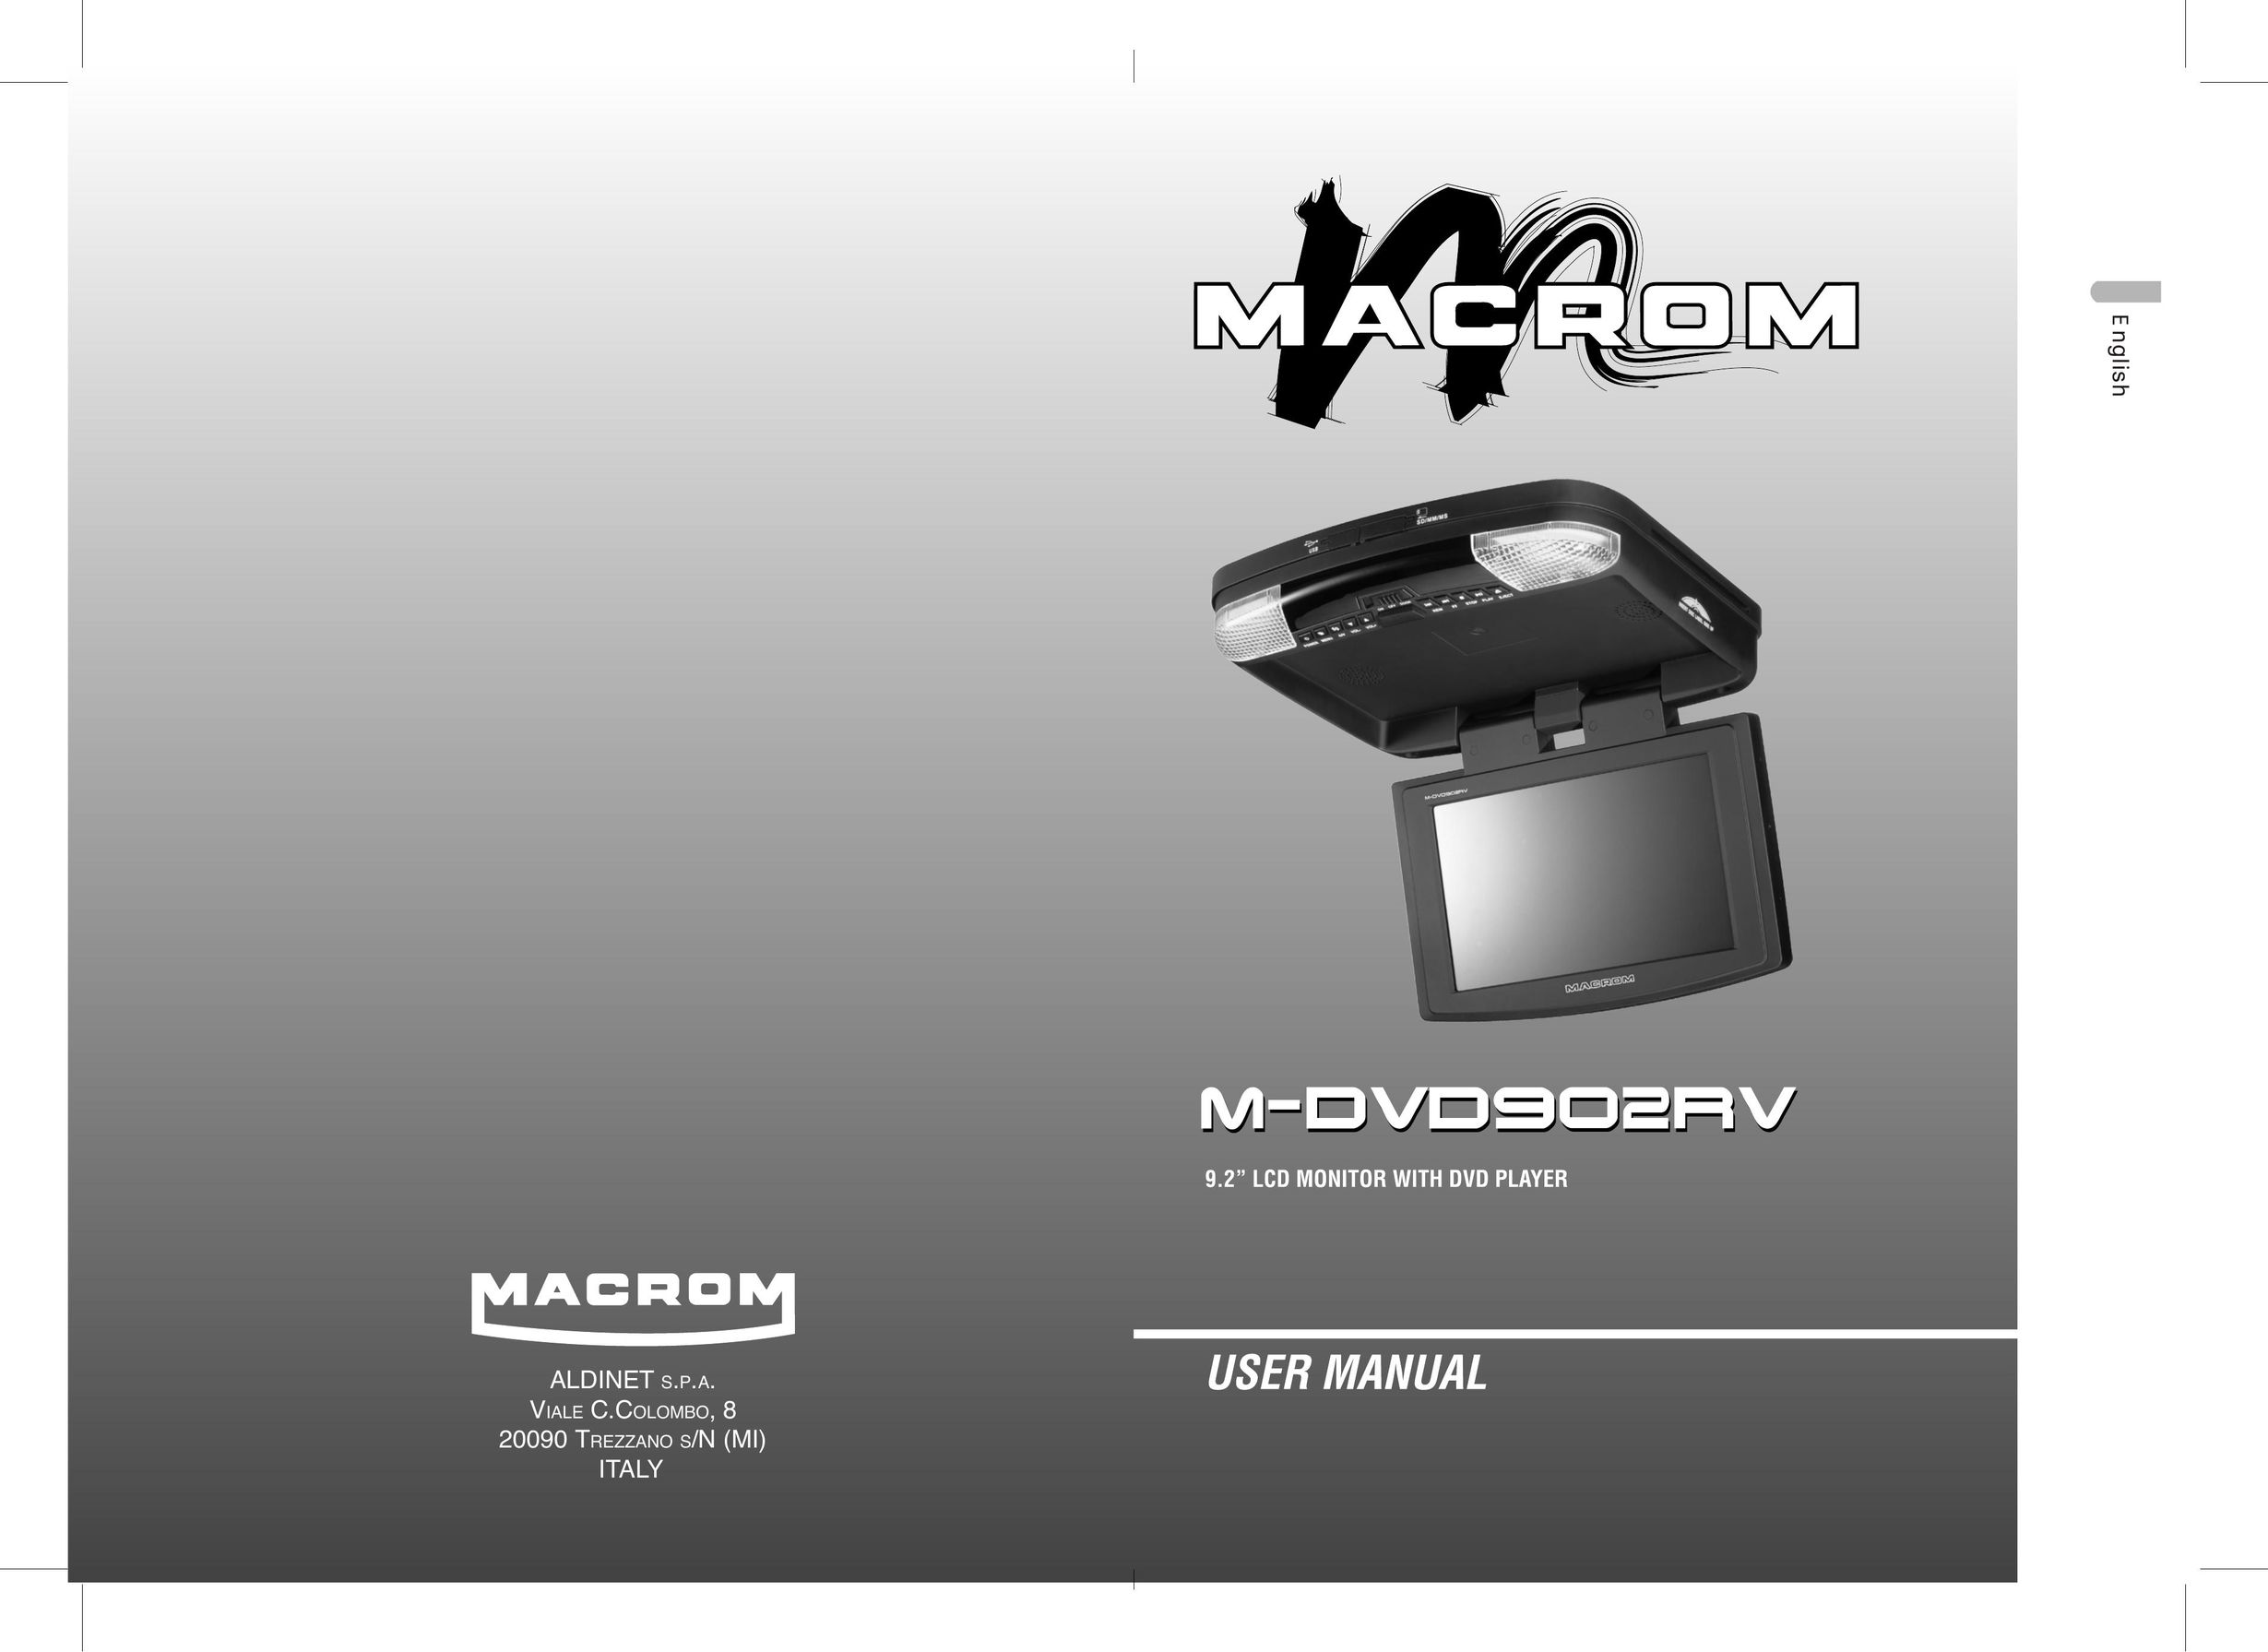 Macrom M-DVD902RV Portable DVD Player User Manual